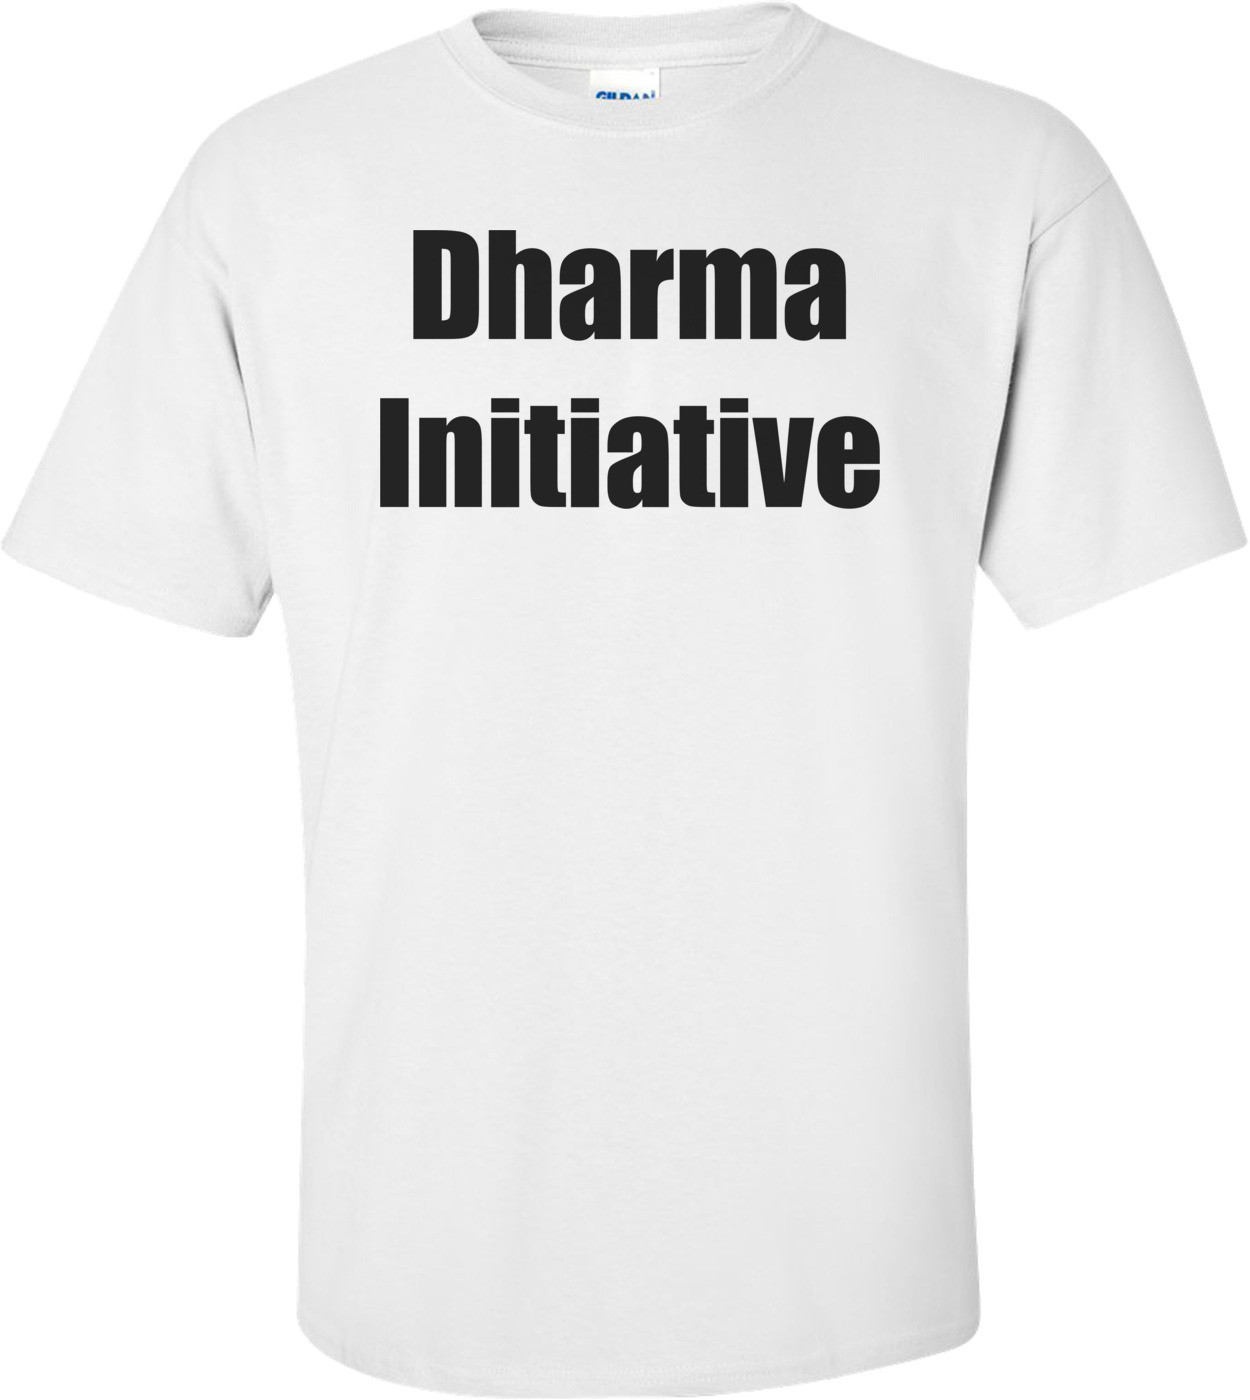 Dharma Initiative Shirt